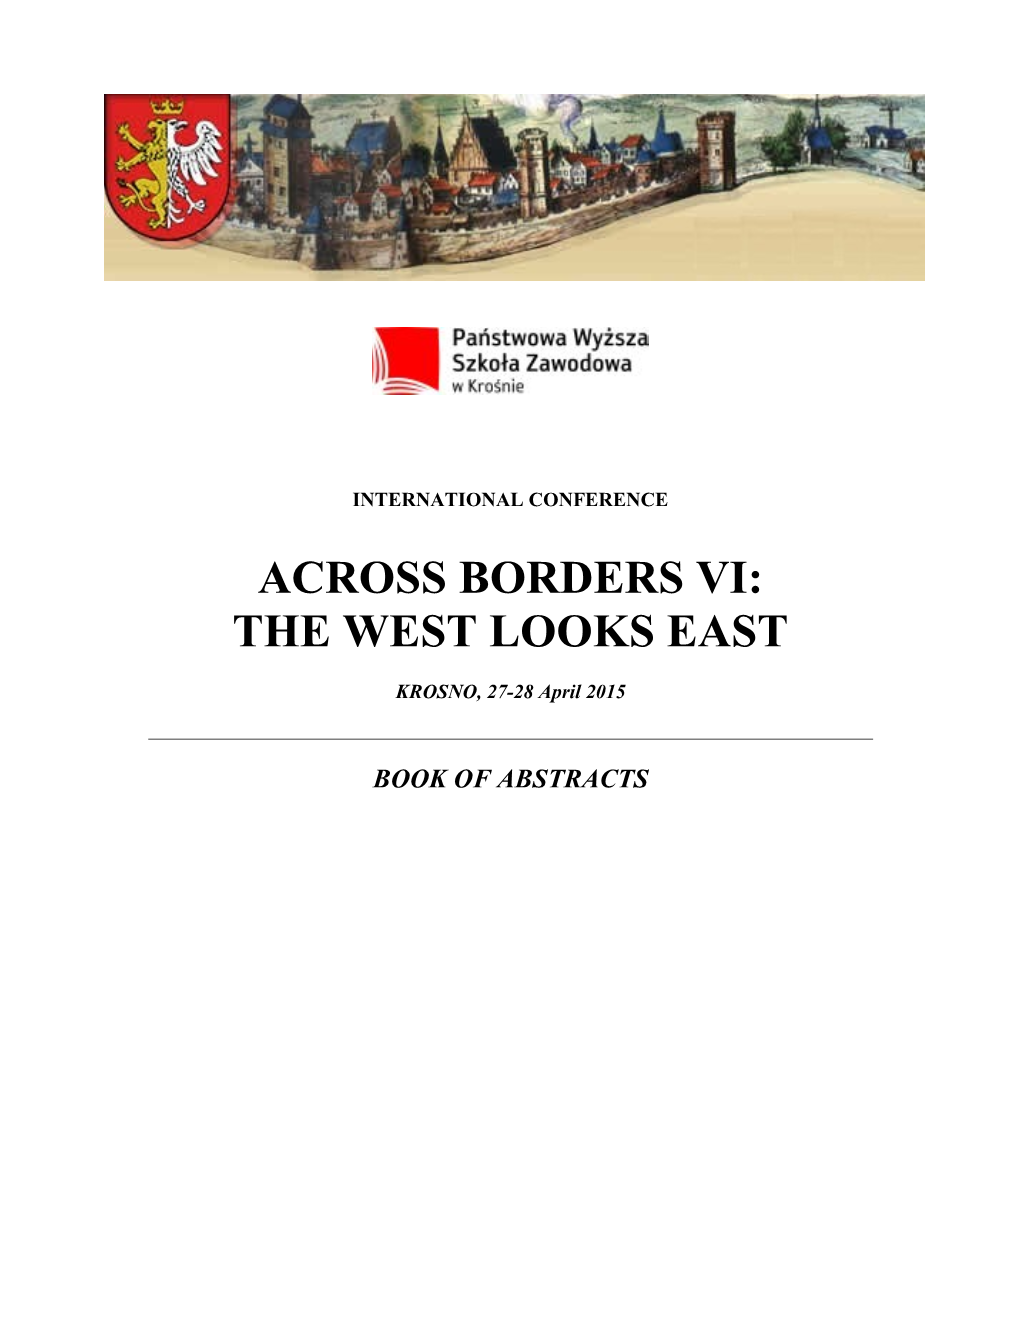 Across Borders Vi: the West Looks East